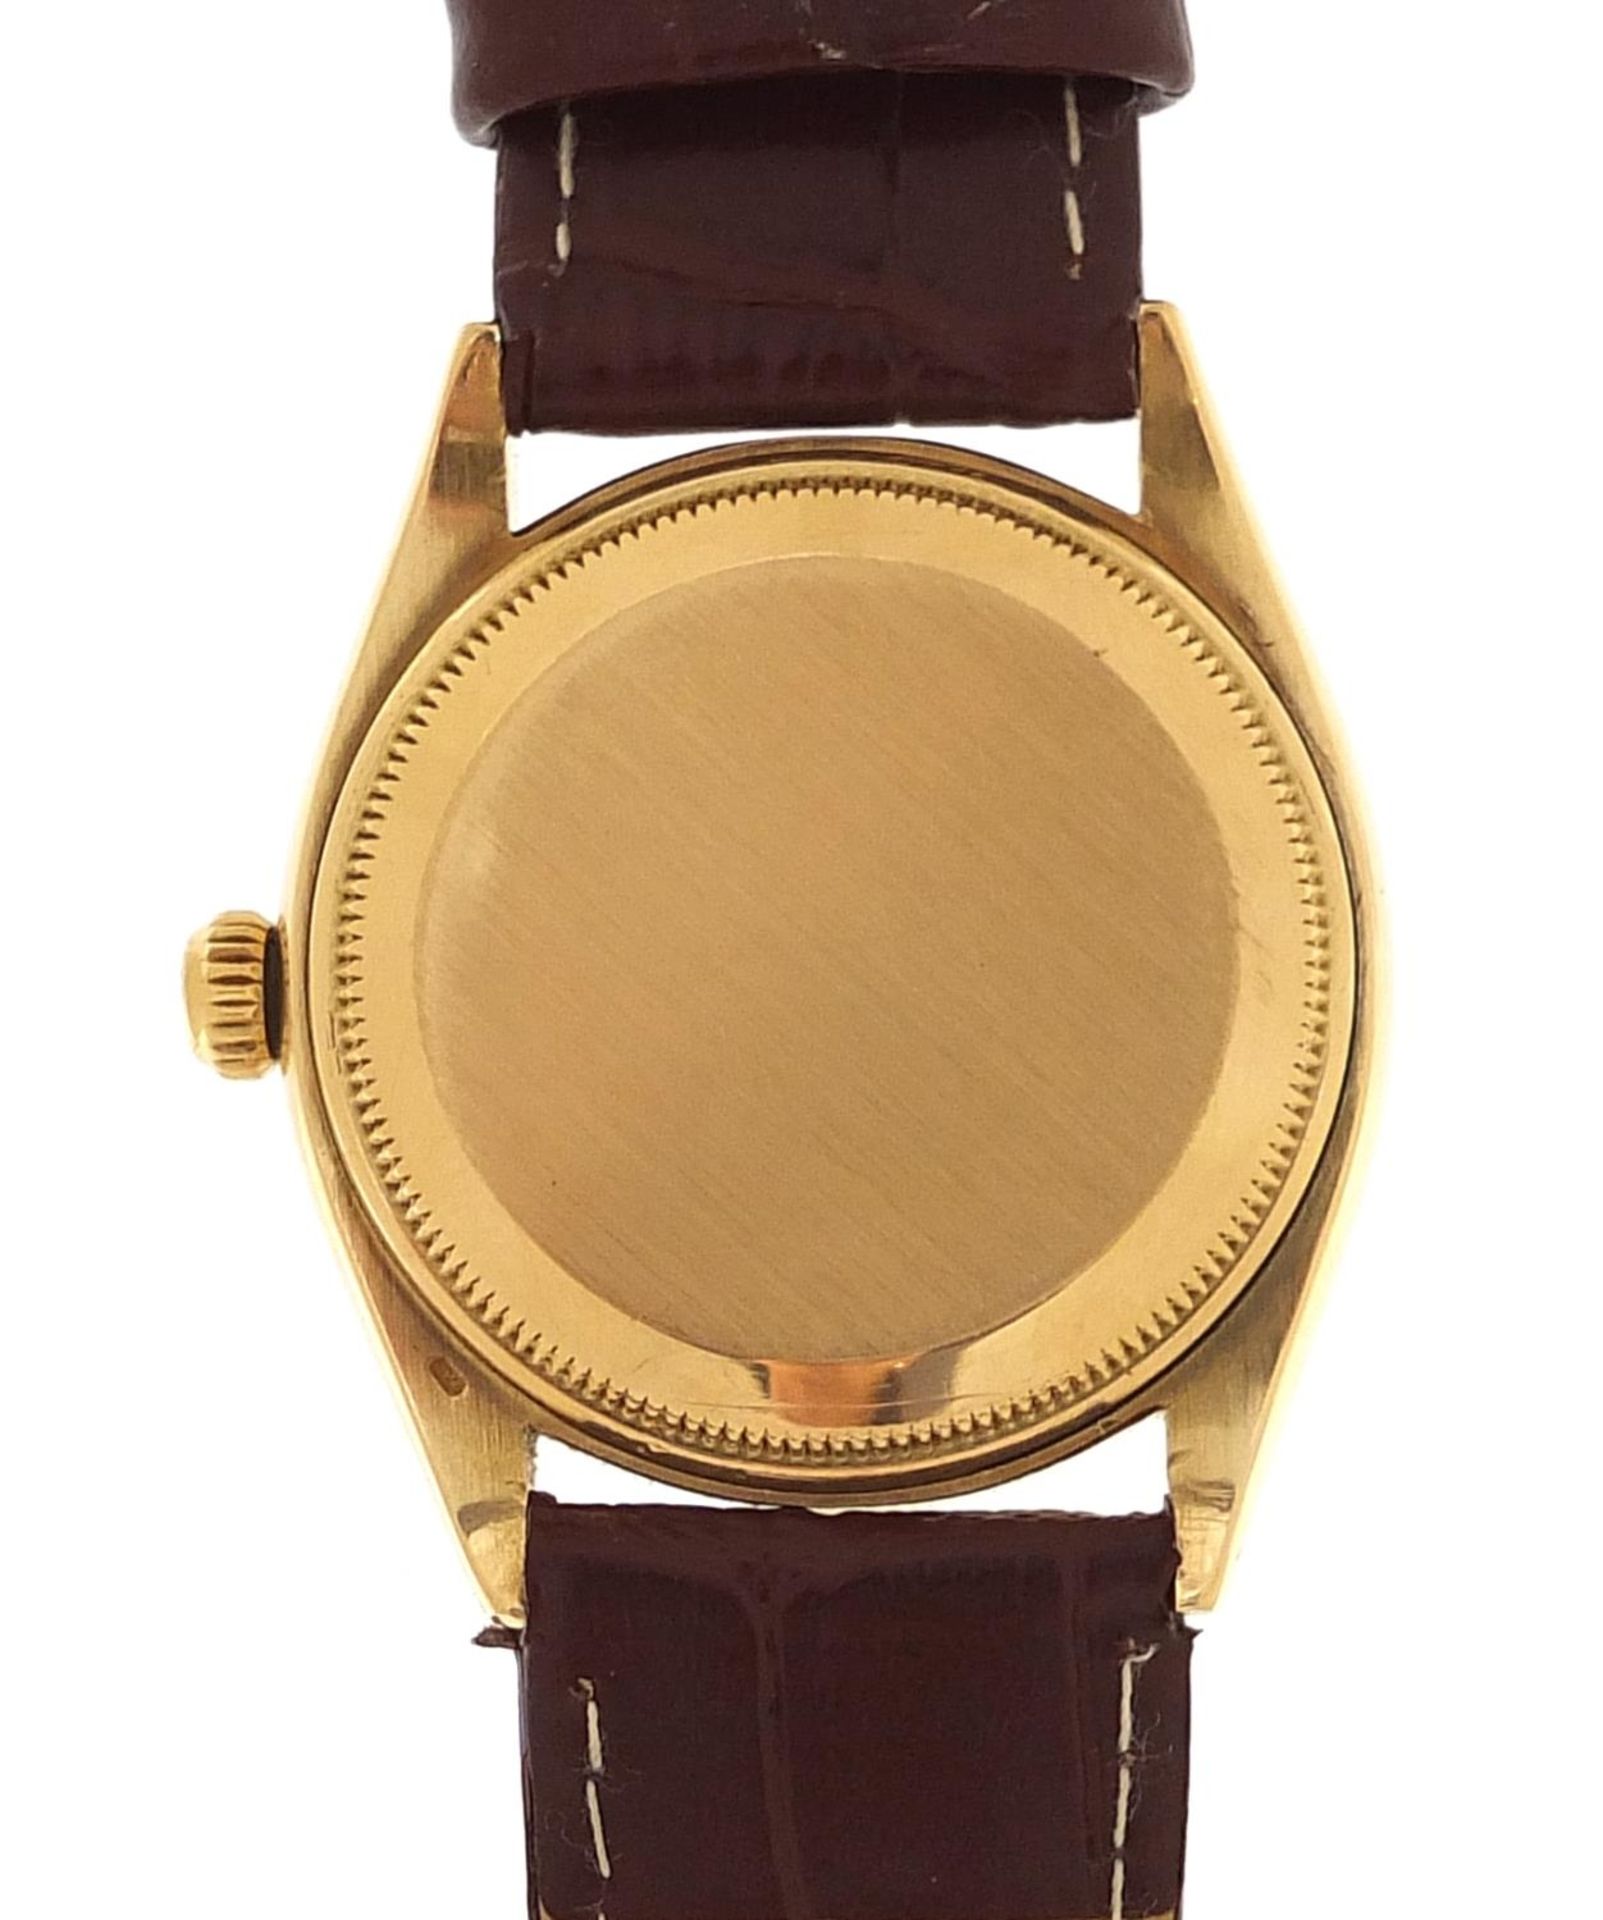 Rolex, gentlemen's gold Rolex Oyster chronometer wristwatch, 33mm in diameter, total weight 50.0g - Image 4 of 6